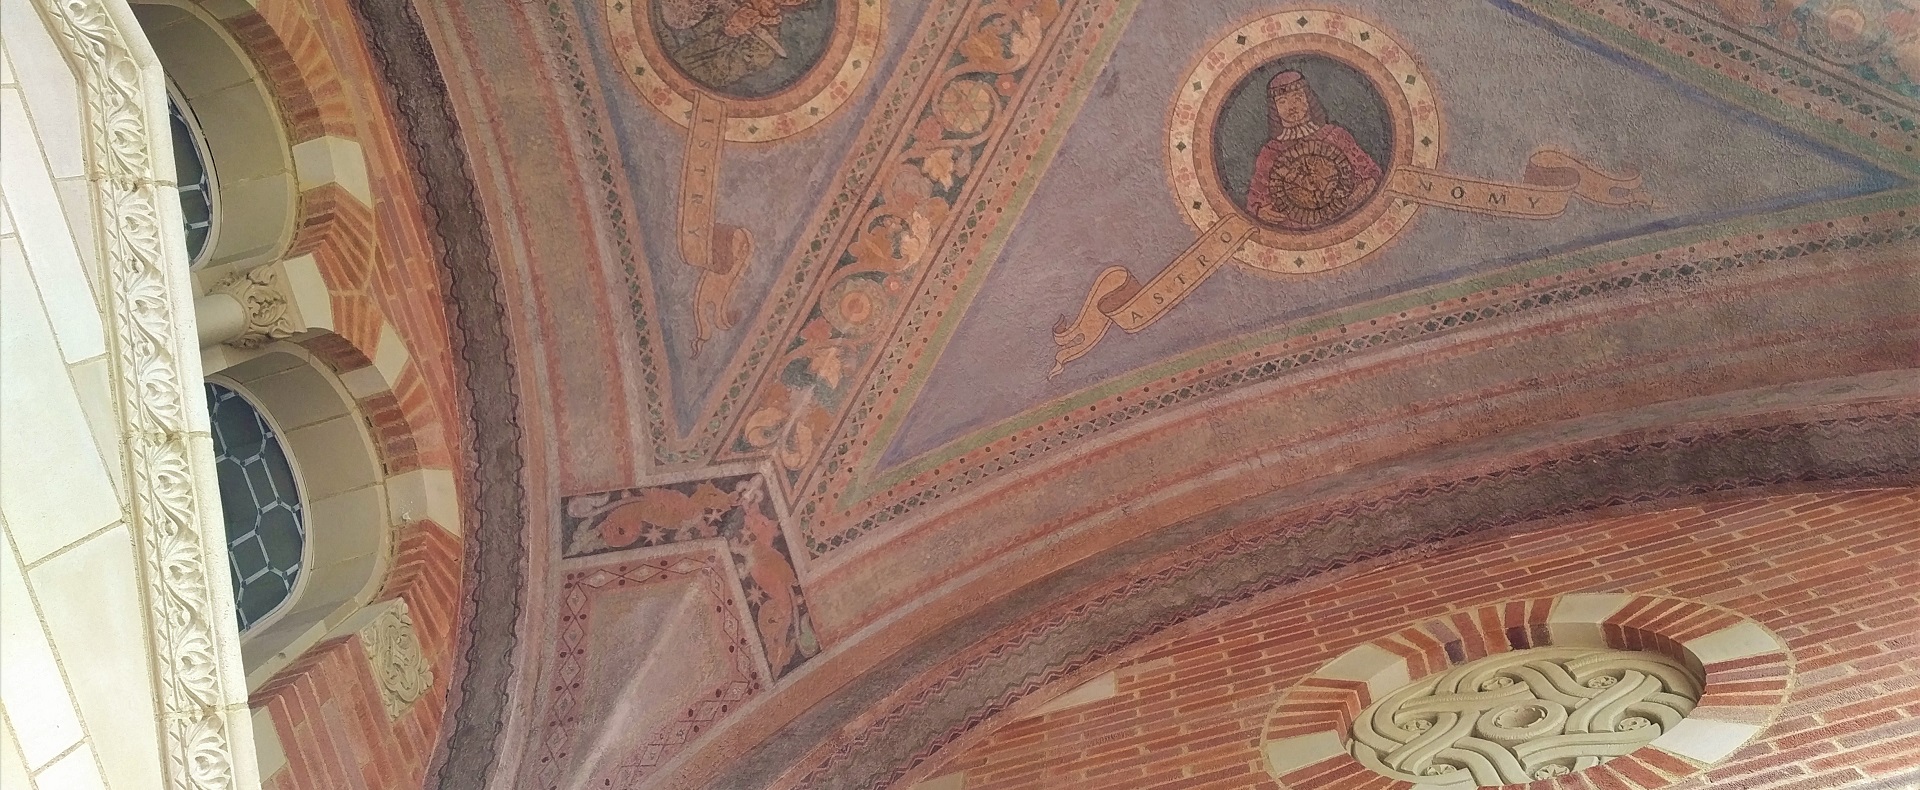 royce hall fresco painting